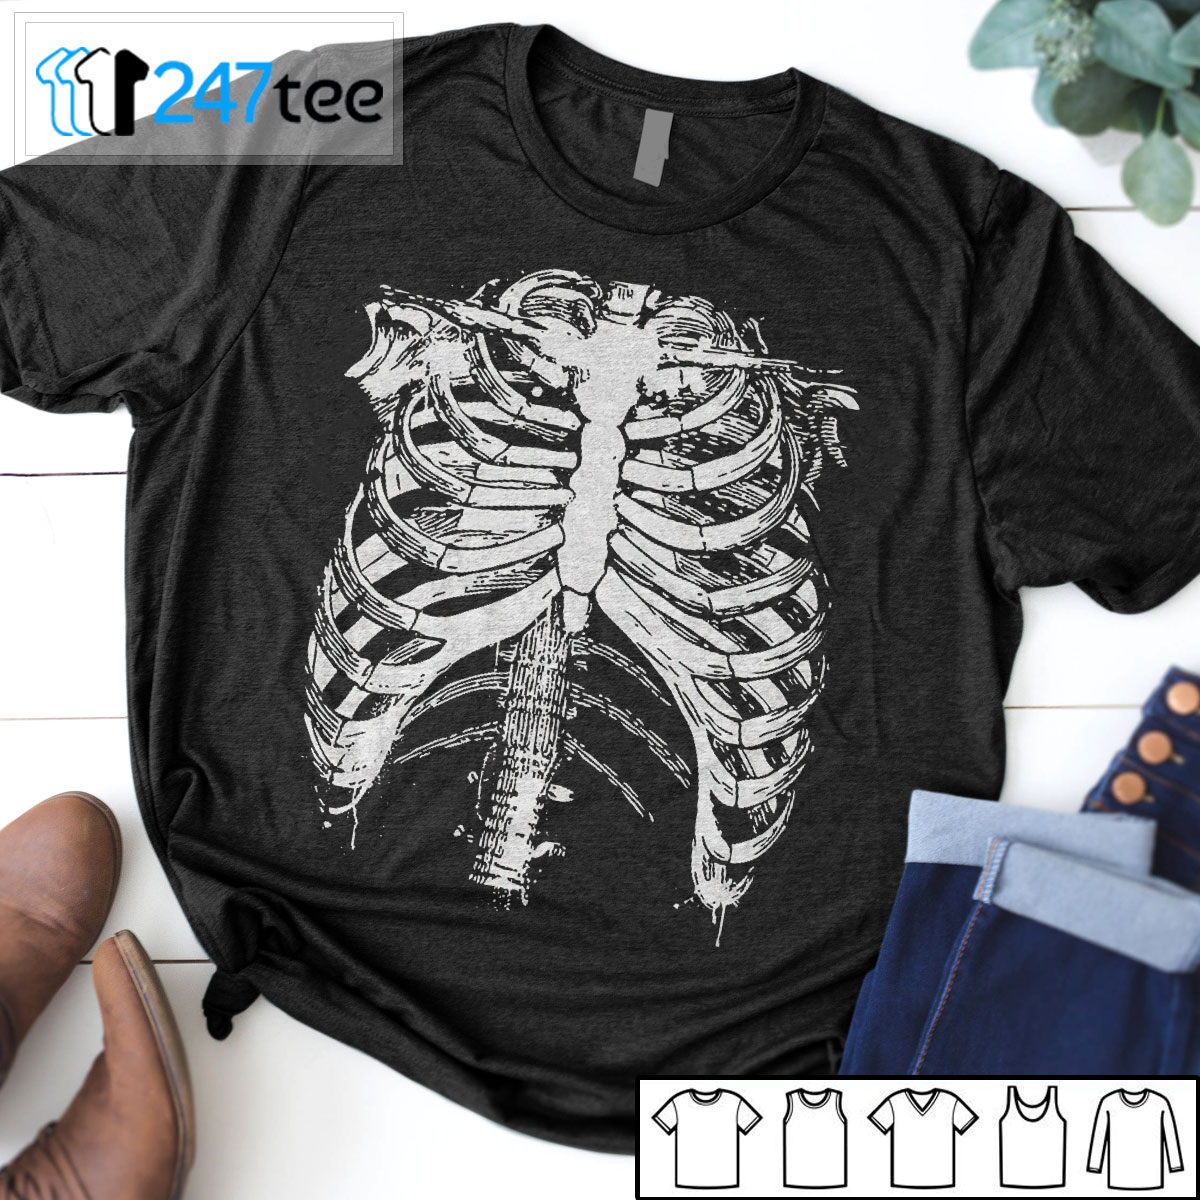 Top 10 Best Skeleton Halloween T-shirt Design Ideas In 2021